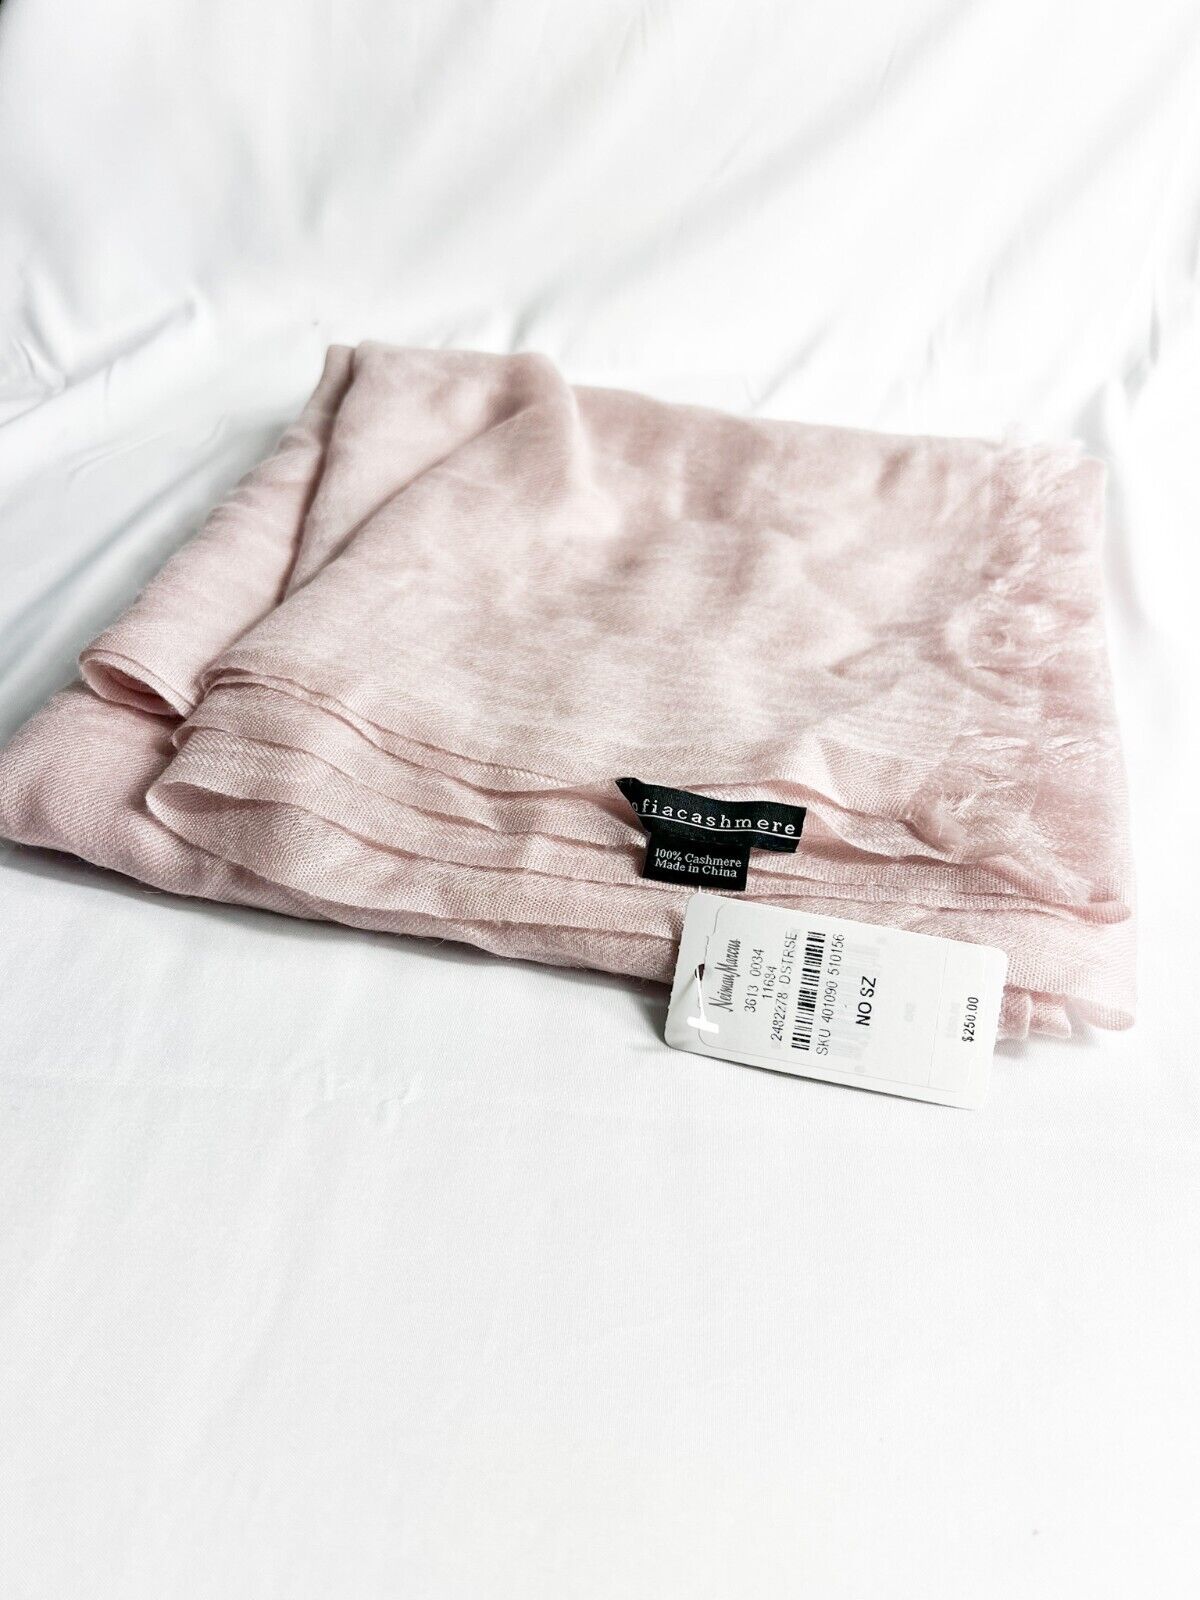 Sofia Cashmere light Pink cashmere large scarf. $250